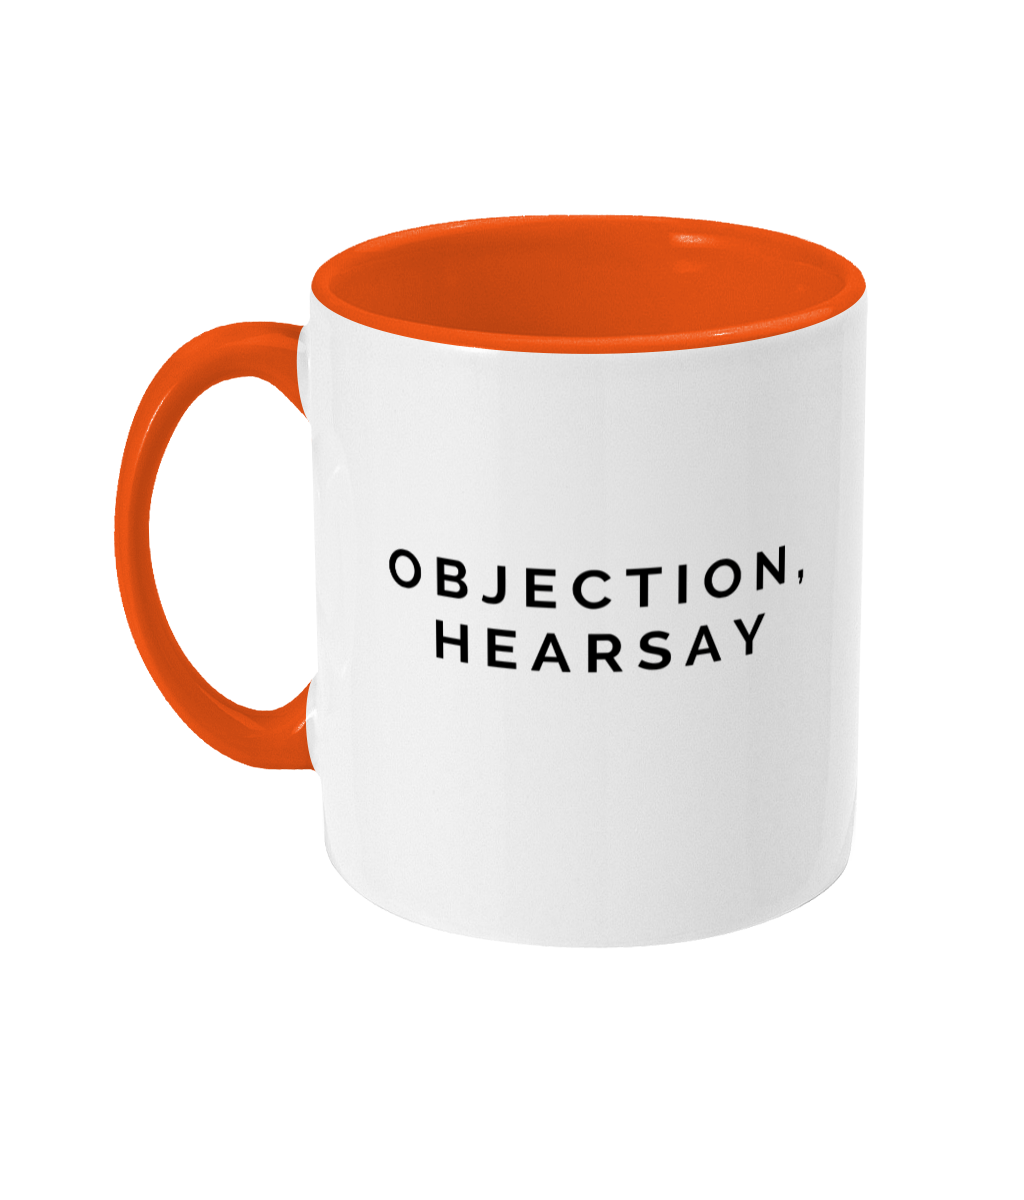 Objection, hearsay Jonny Depp, Amber Heard mug